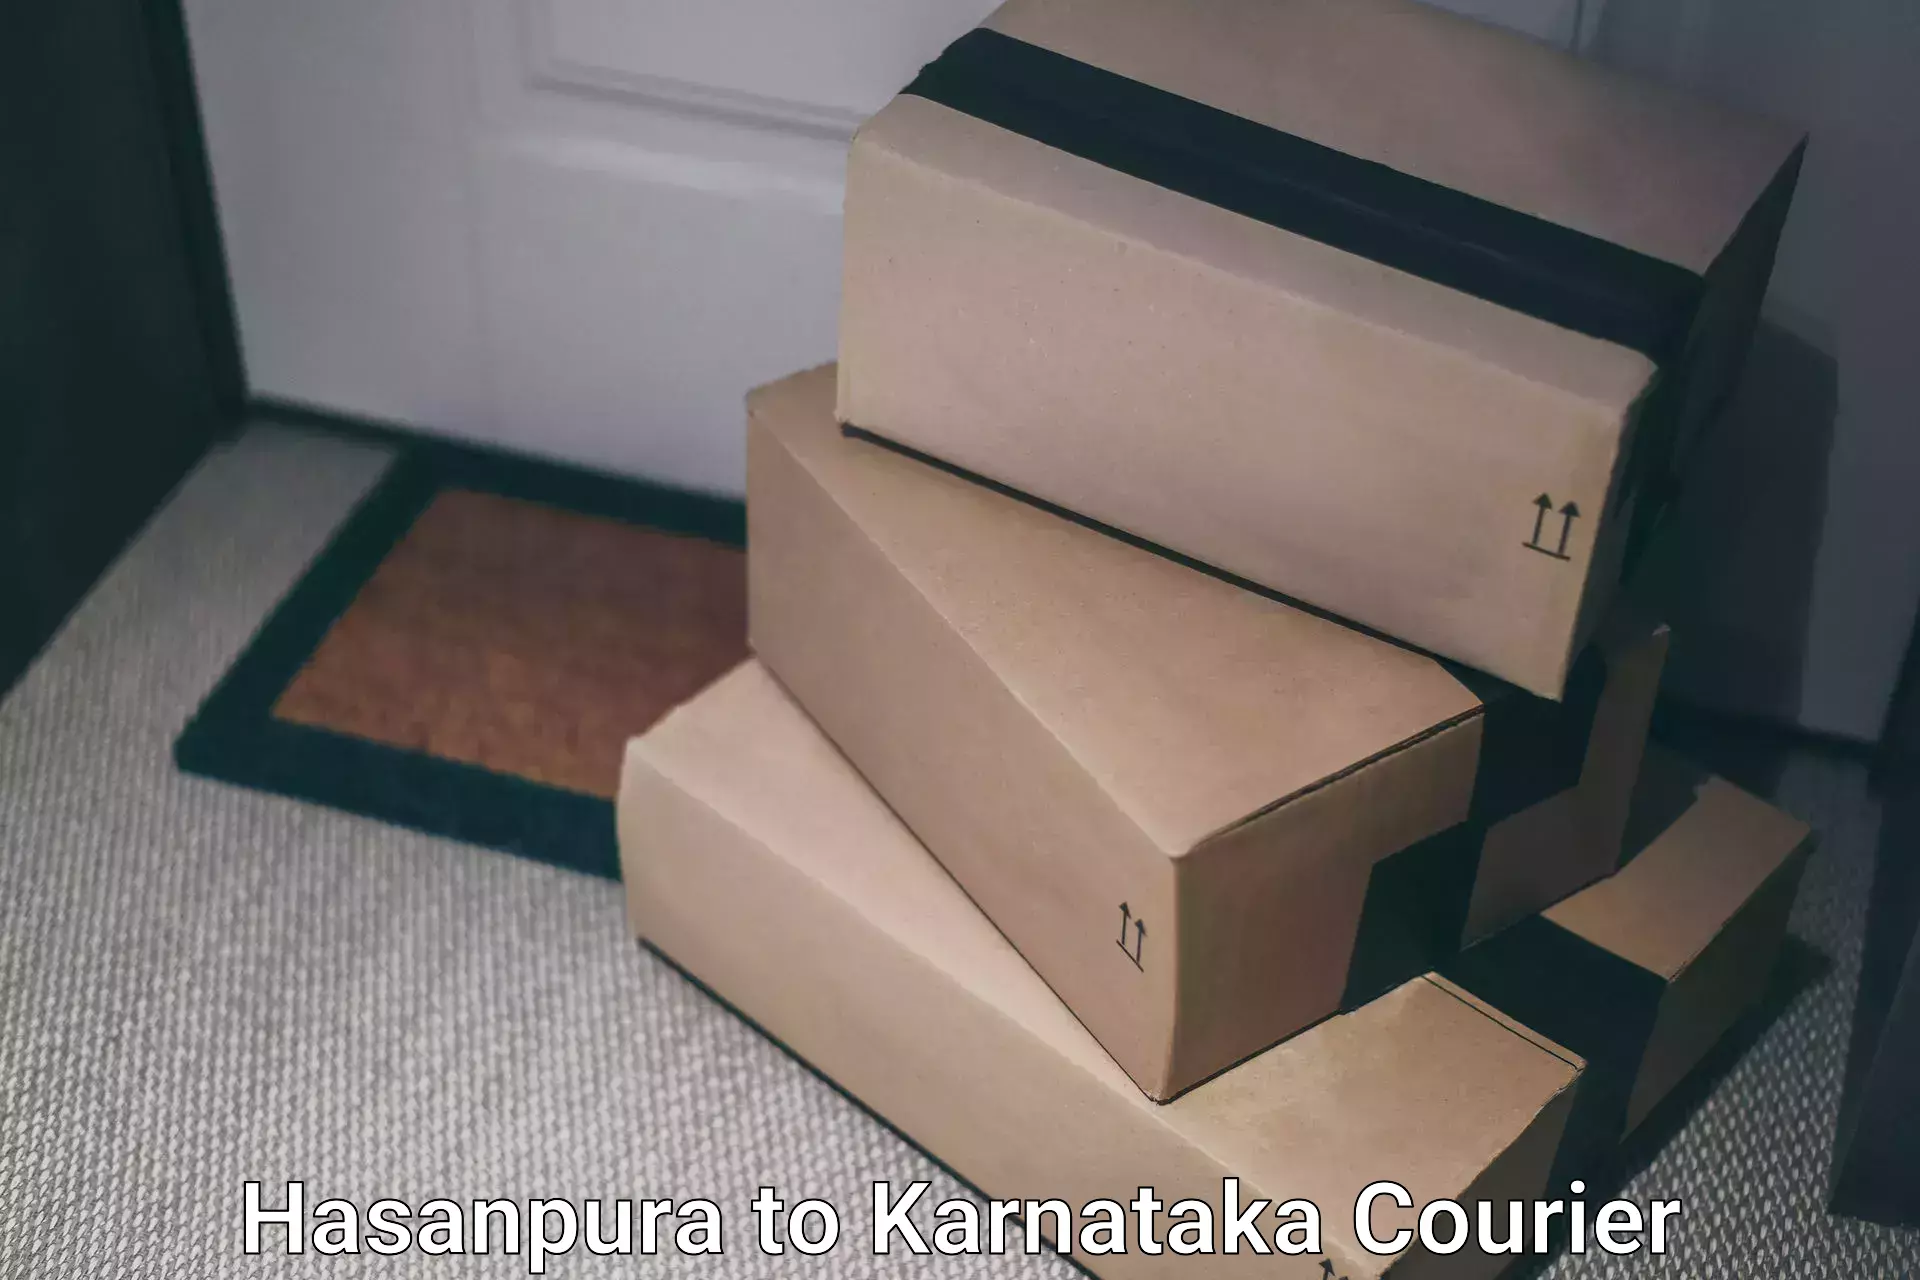 International parcel service Hasanpura to Yenepoya Mangalore